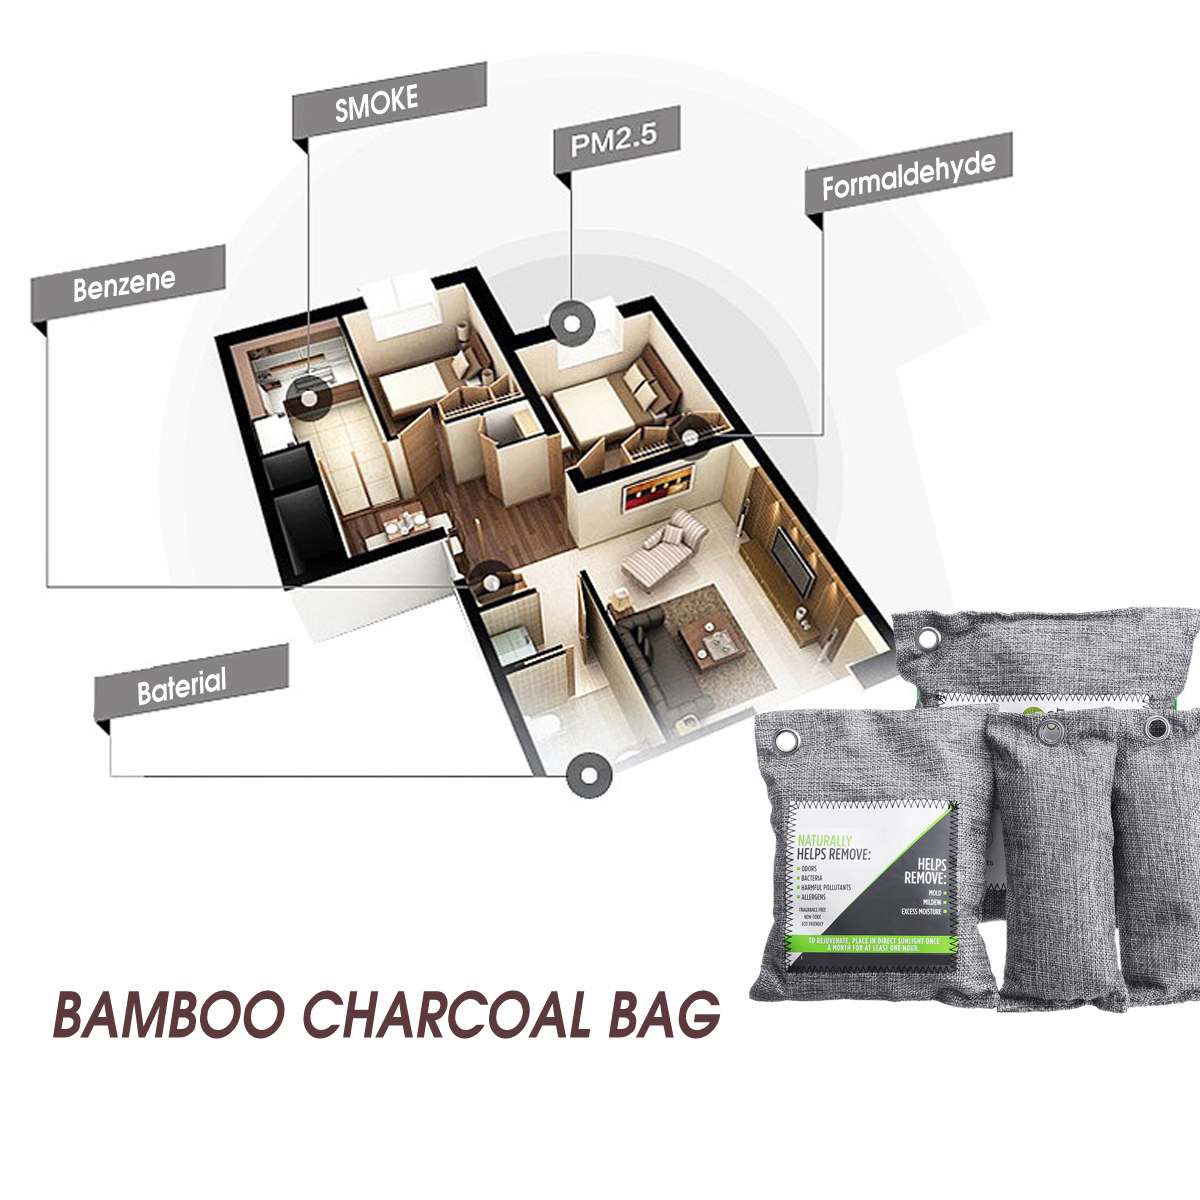 Purifier Bag Car Home Shoes Bamboo Charcoal Dehumidifier Odor Remover Purifying Bag Natural Freshener Bags